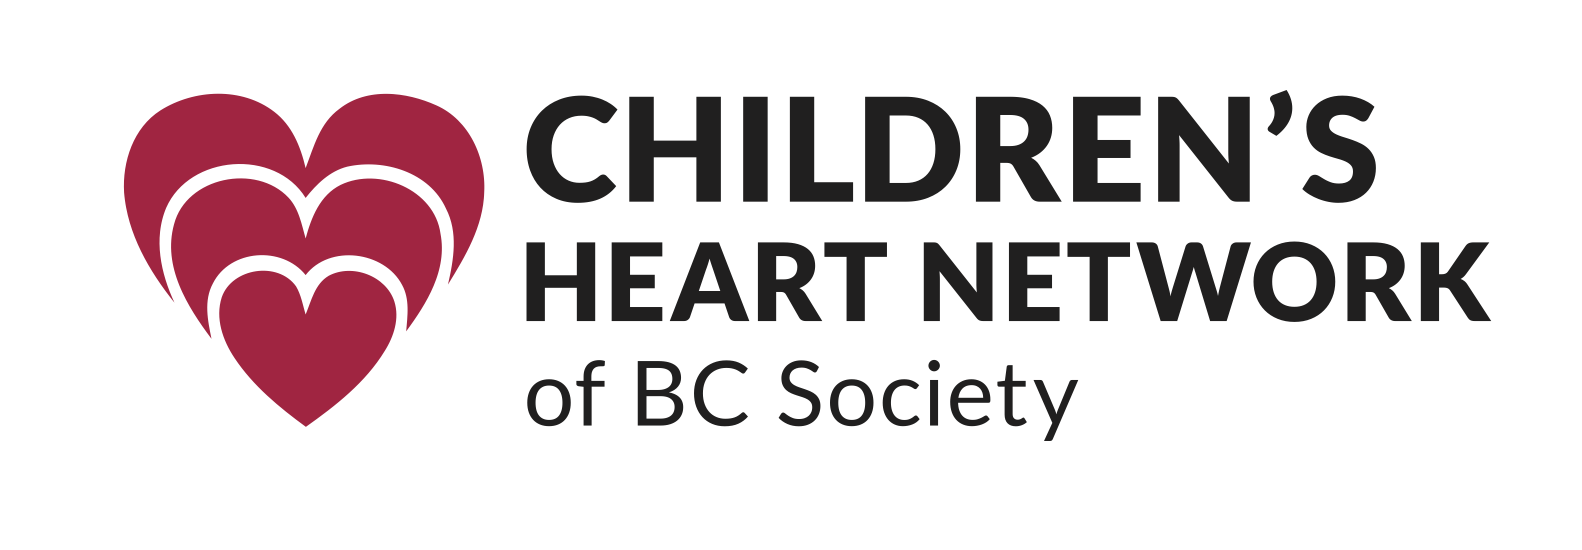 The Children's Heart Network